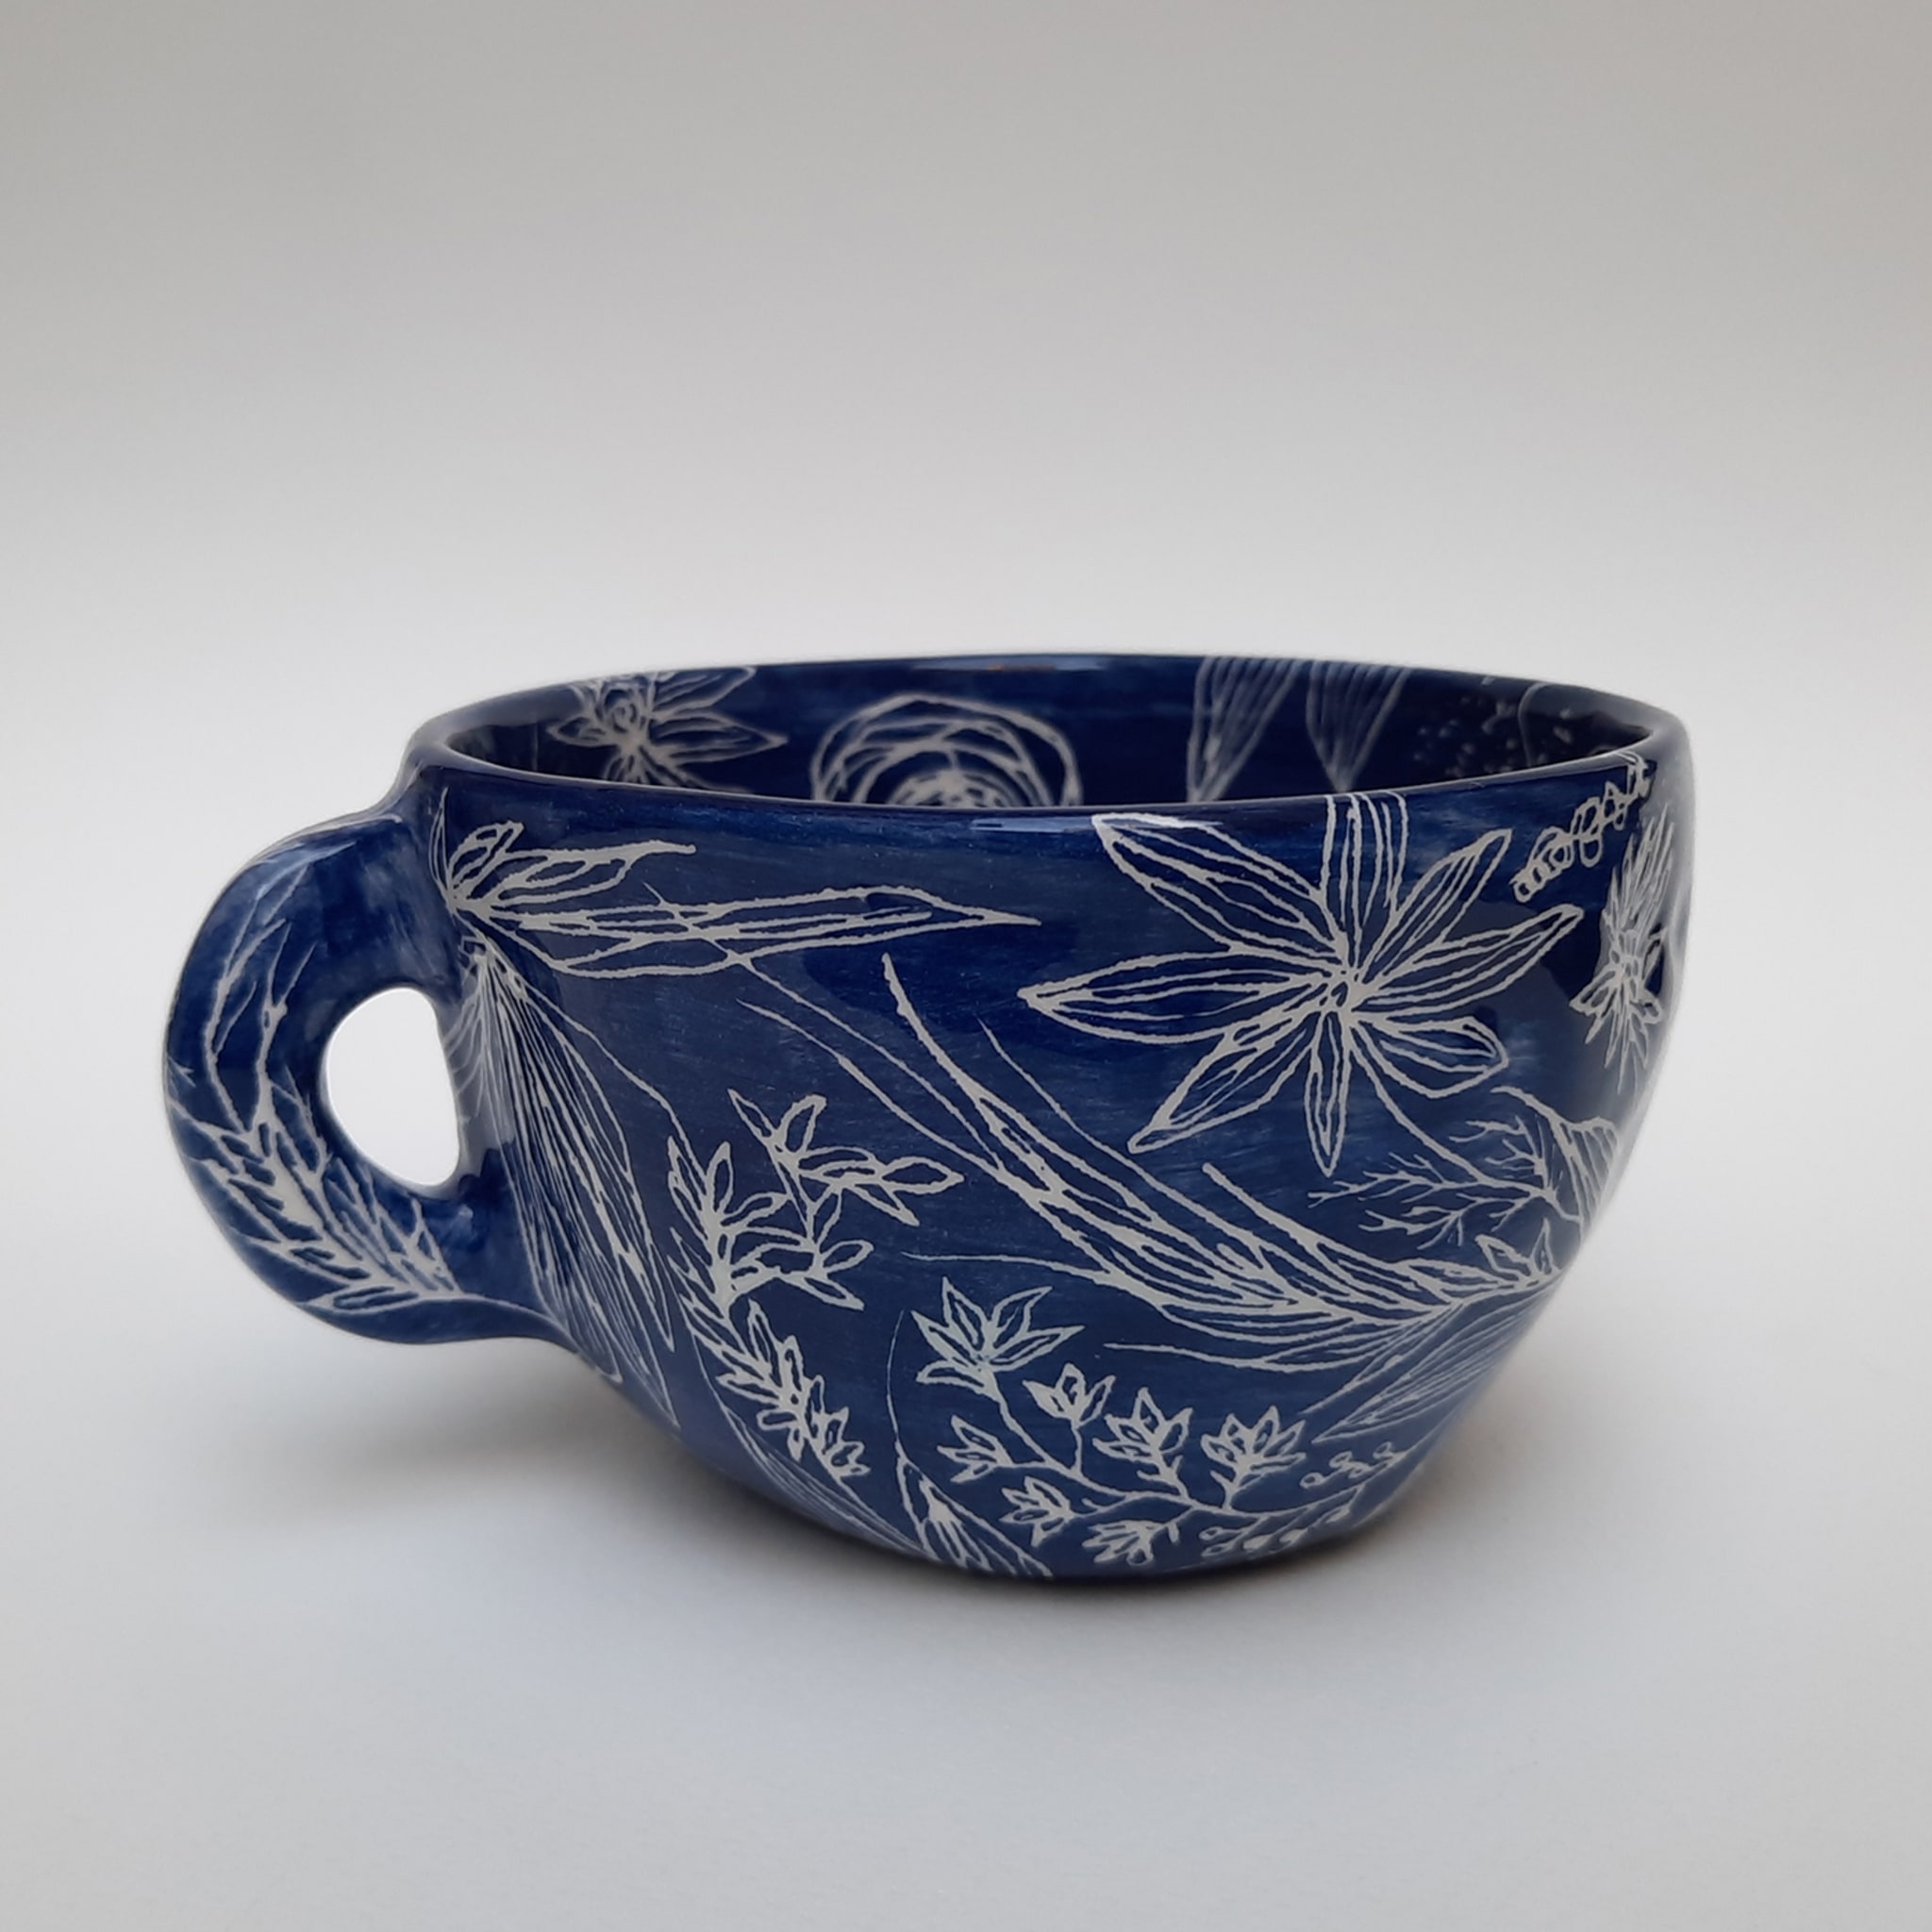 Ricamo Floral Blue Teacup - Alternative view 1